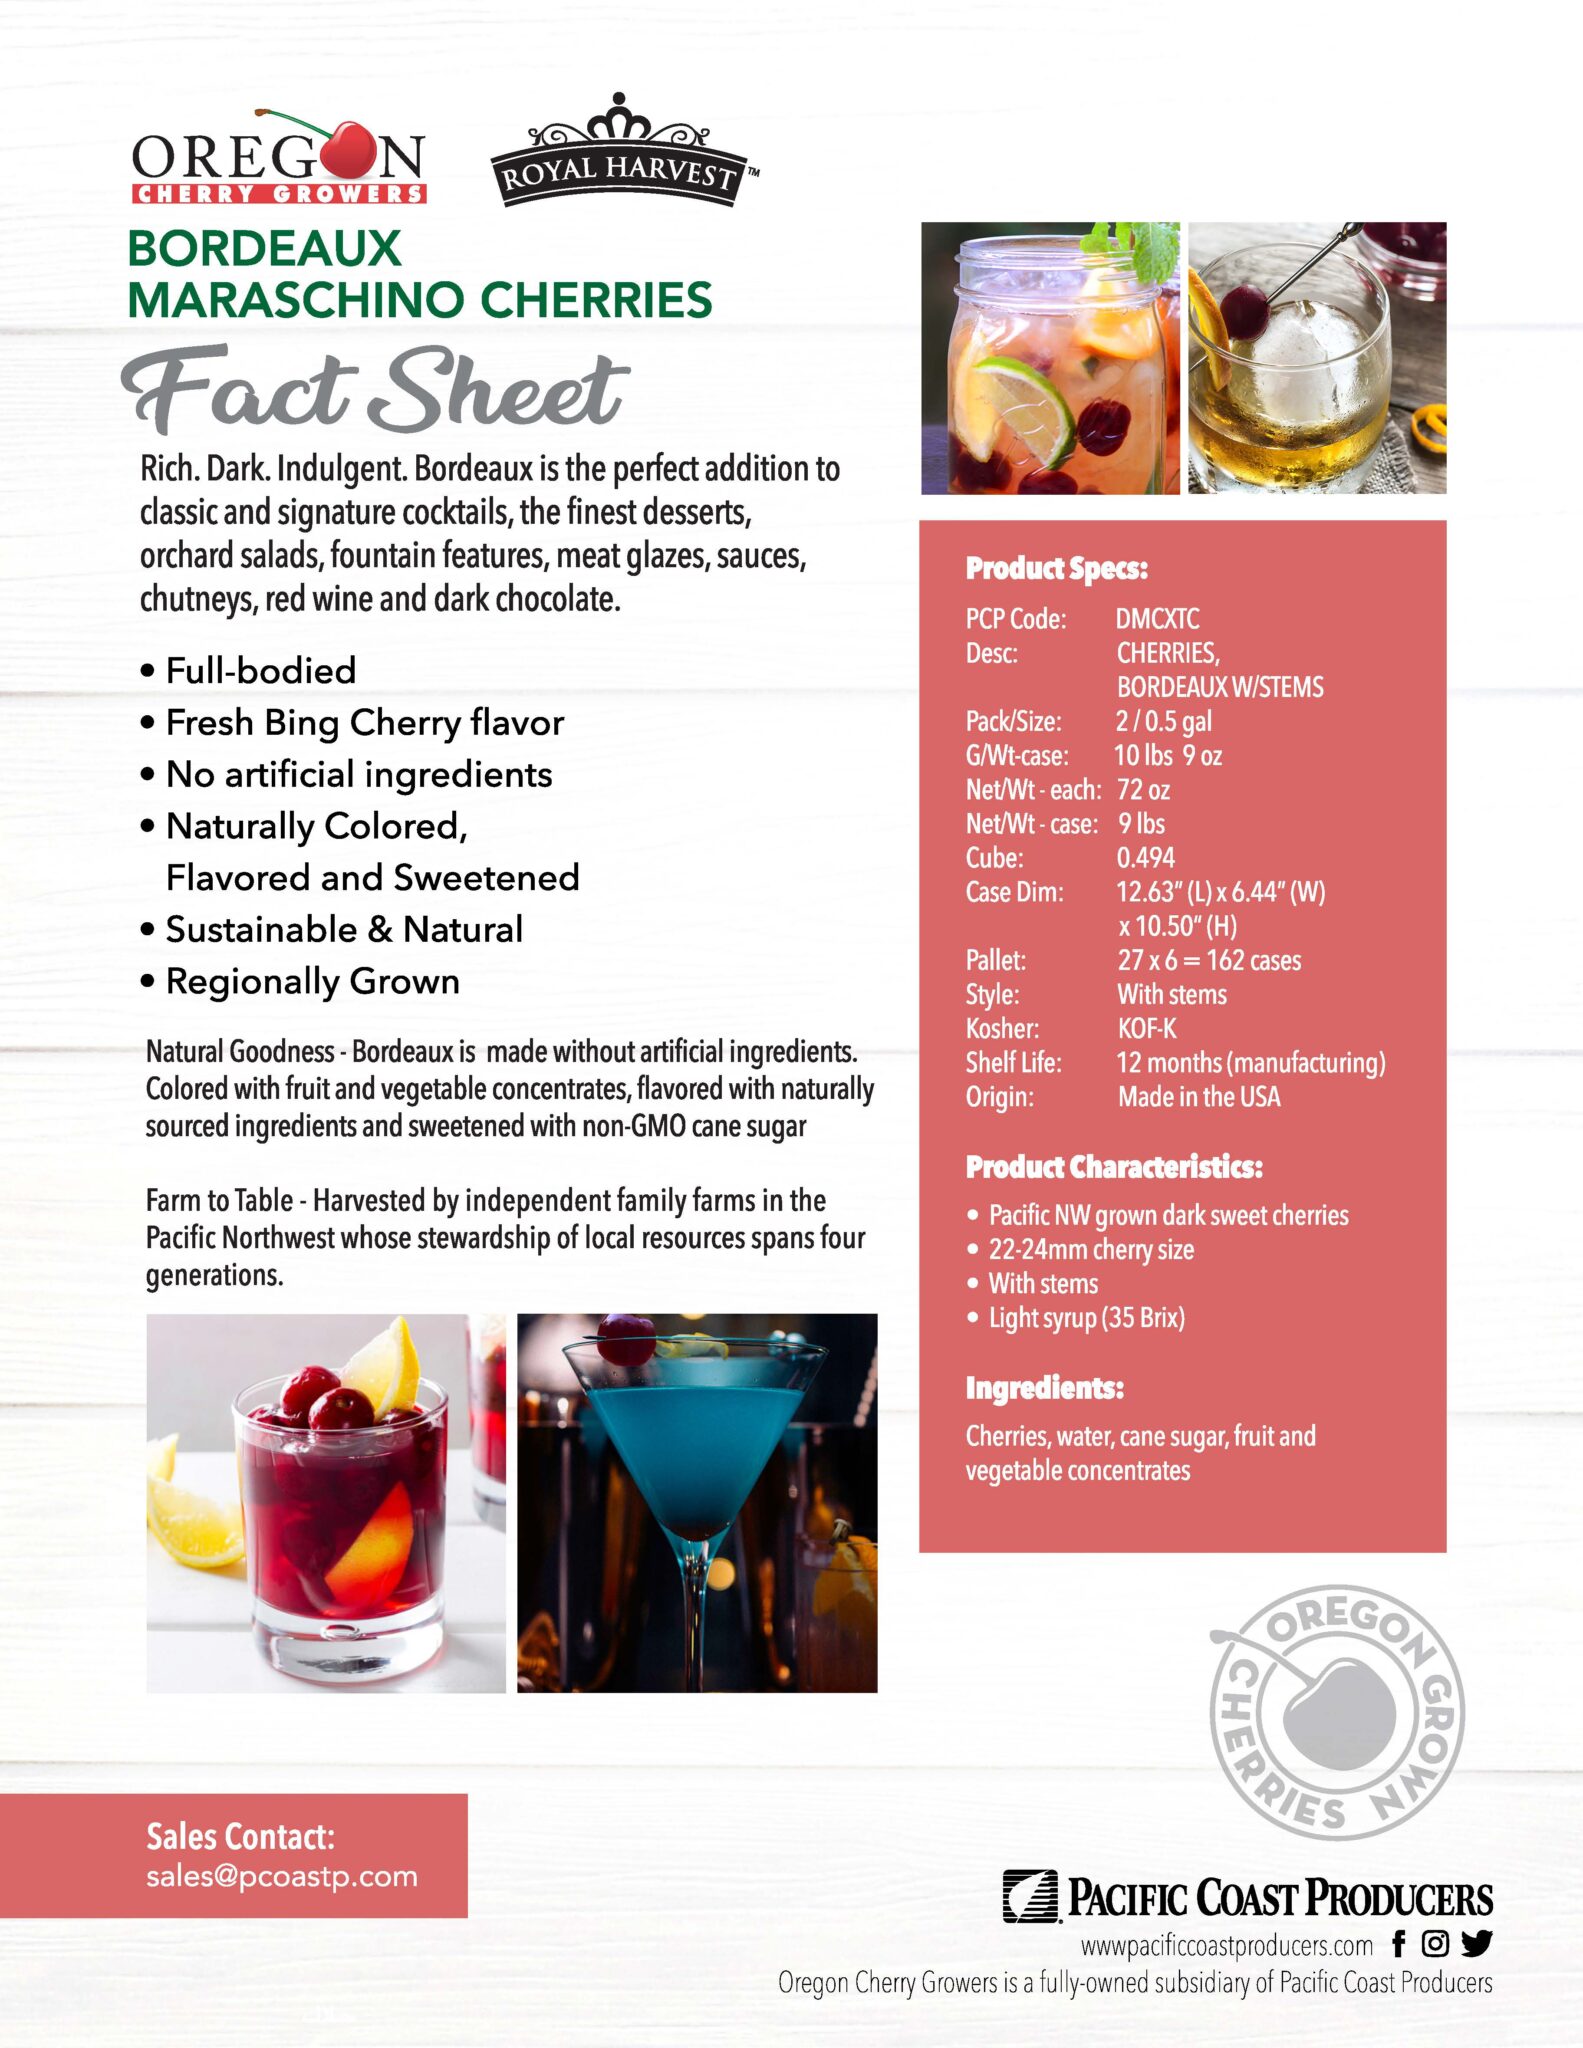 A handout featuring a maraschino cherries recipe.